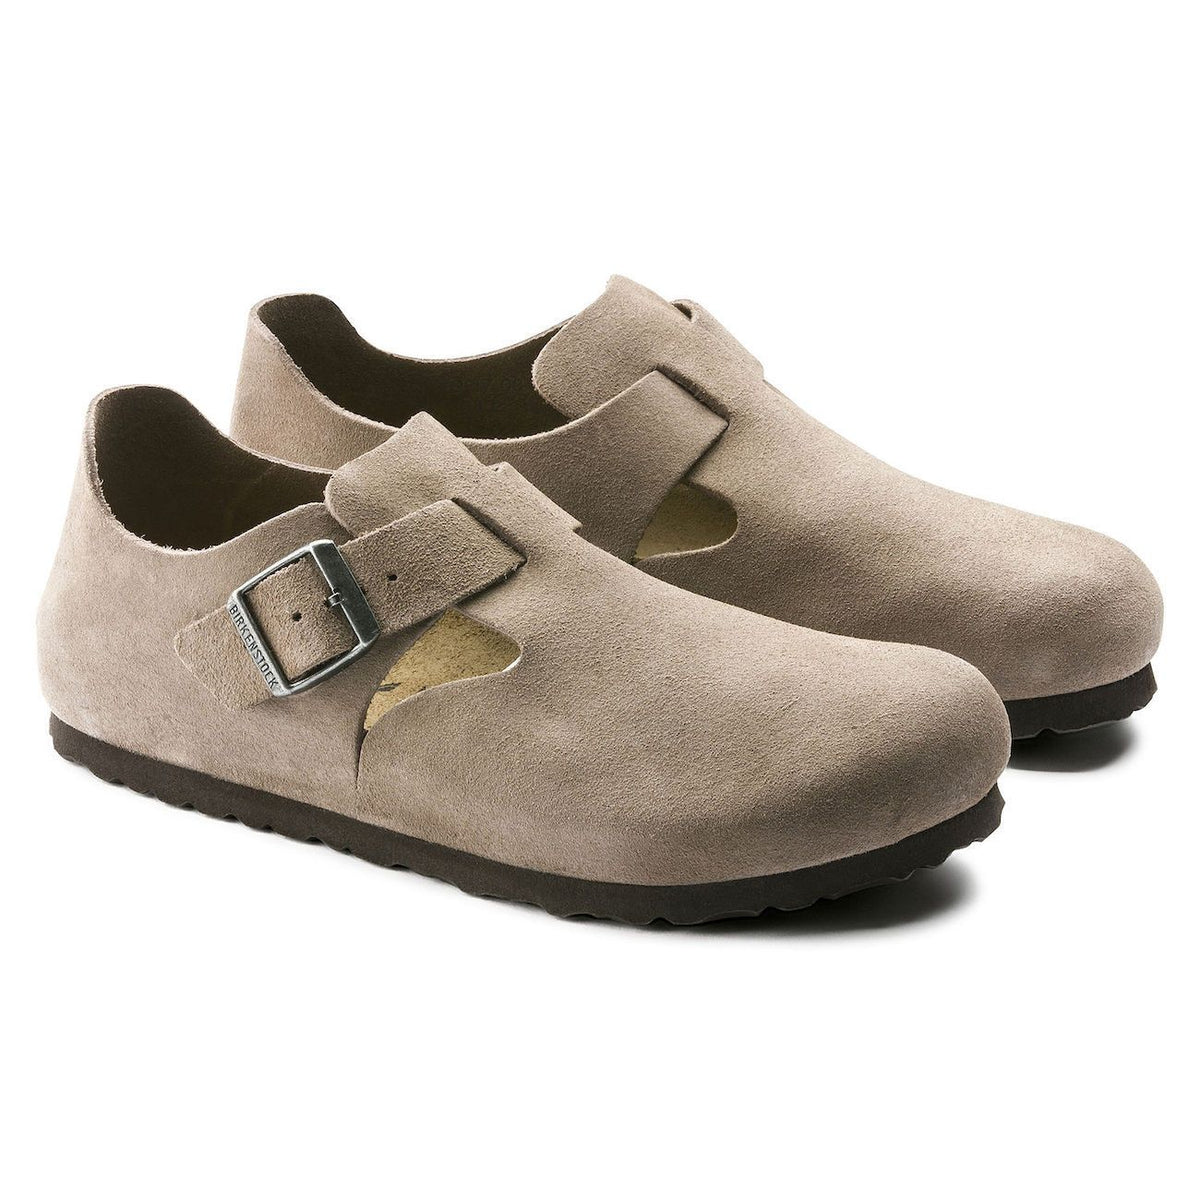 Birkenstock Shoes, London, Suede Leather, Narrow Fit, Taupe Shoes Birkenstock Shoes 